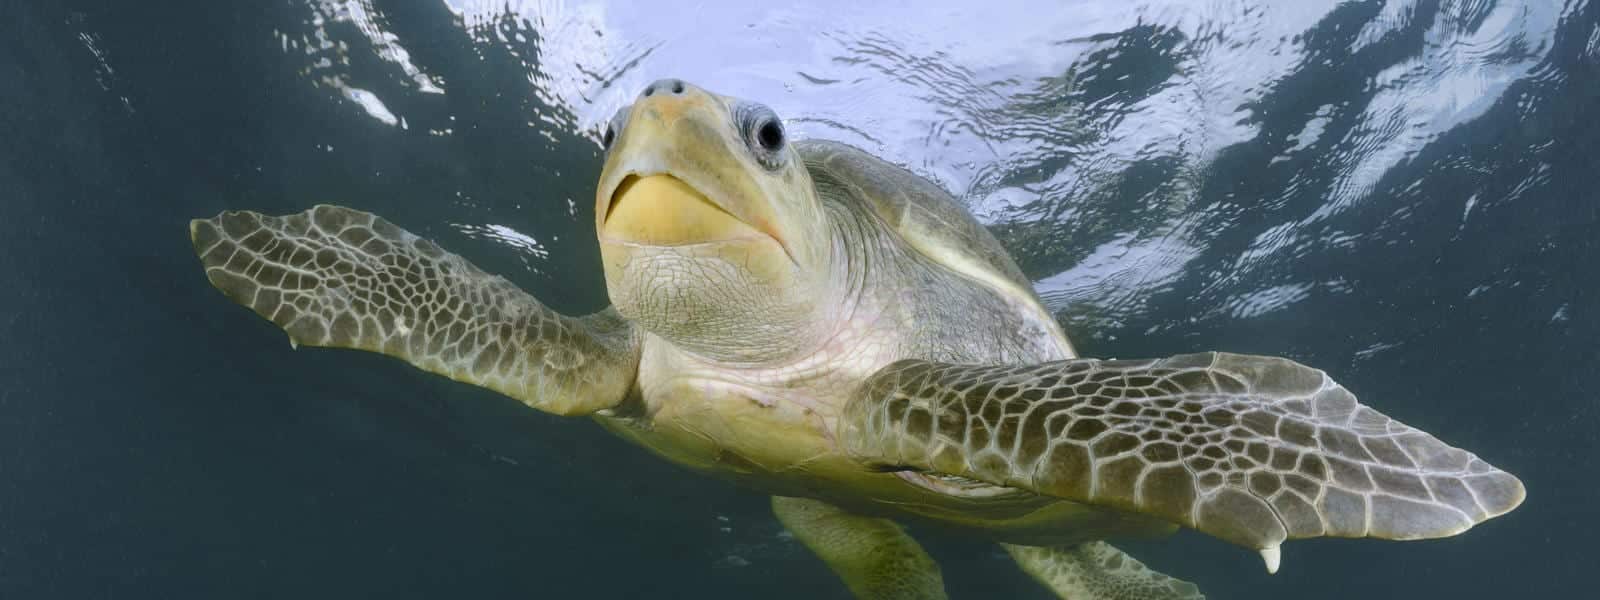 Tartarugas marinhas - características típicas das espécies